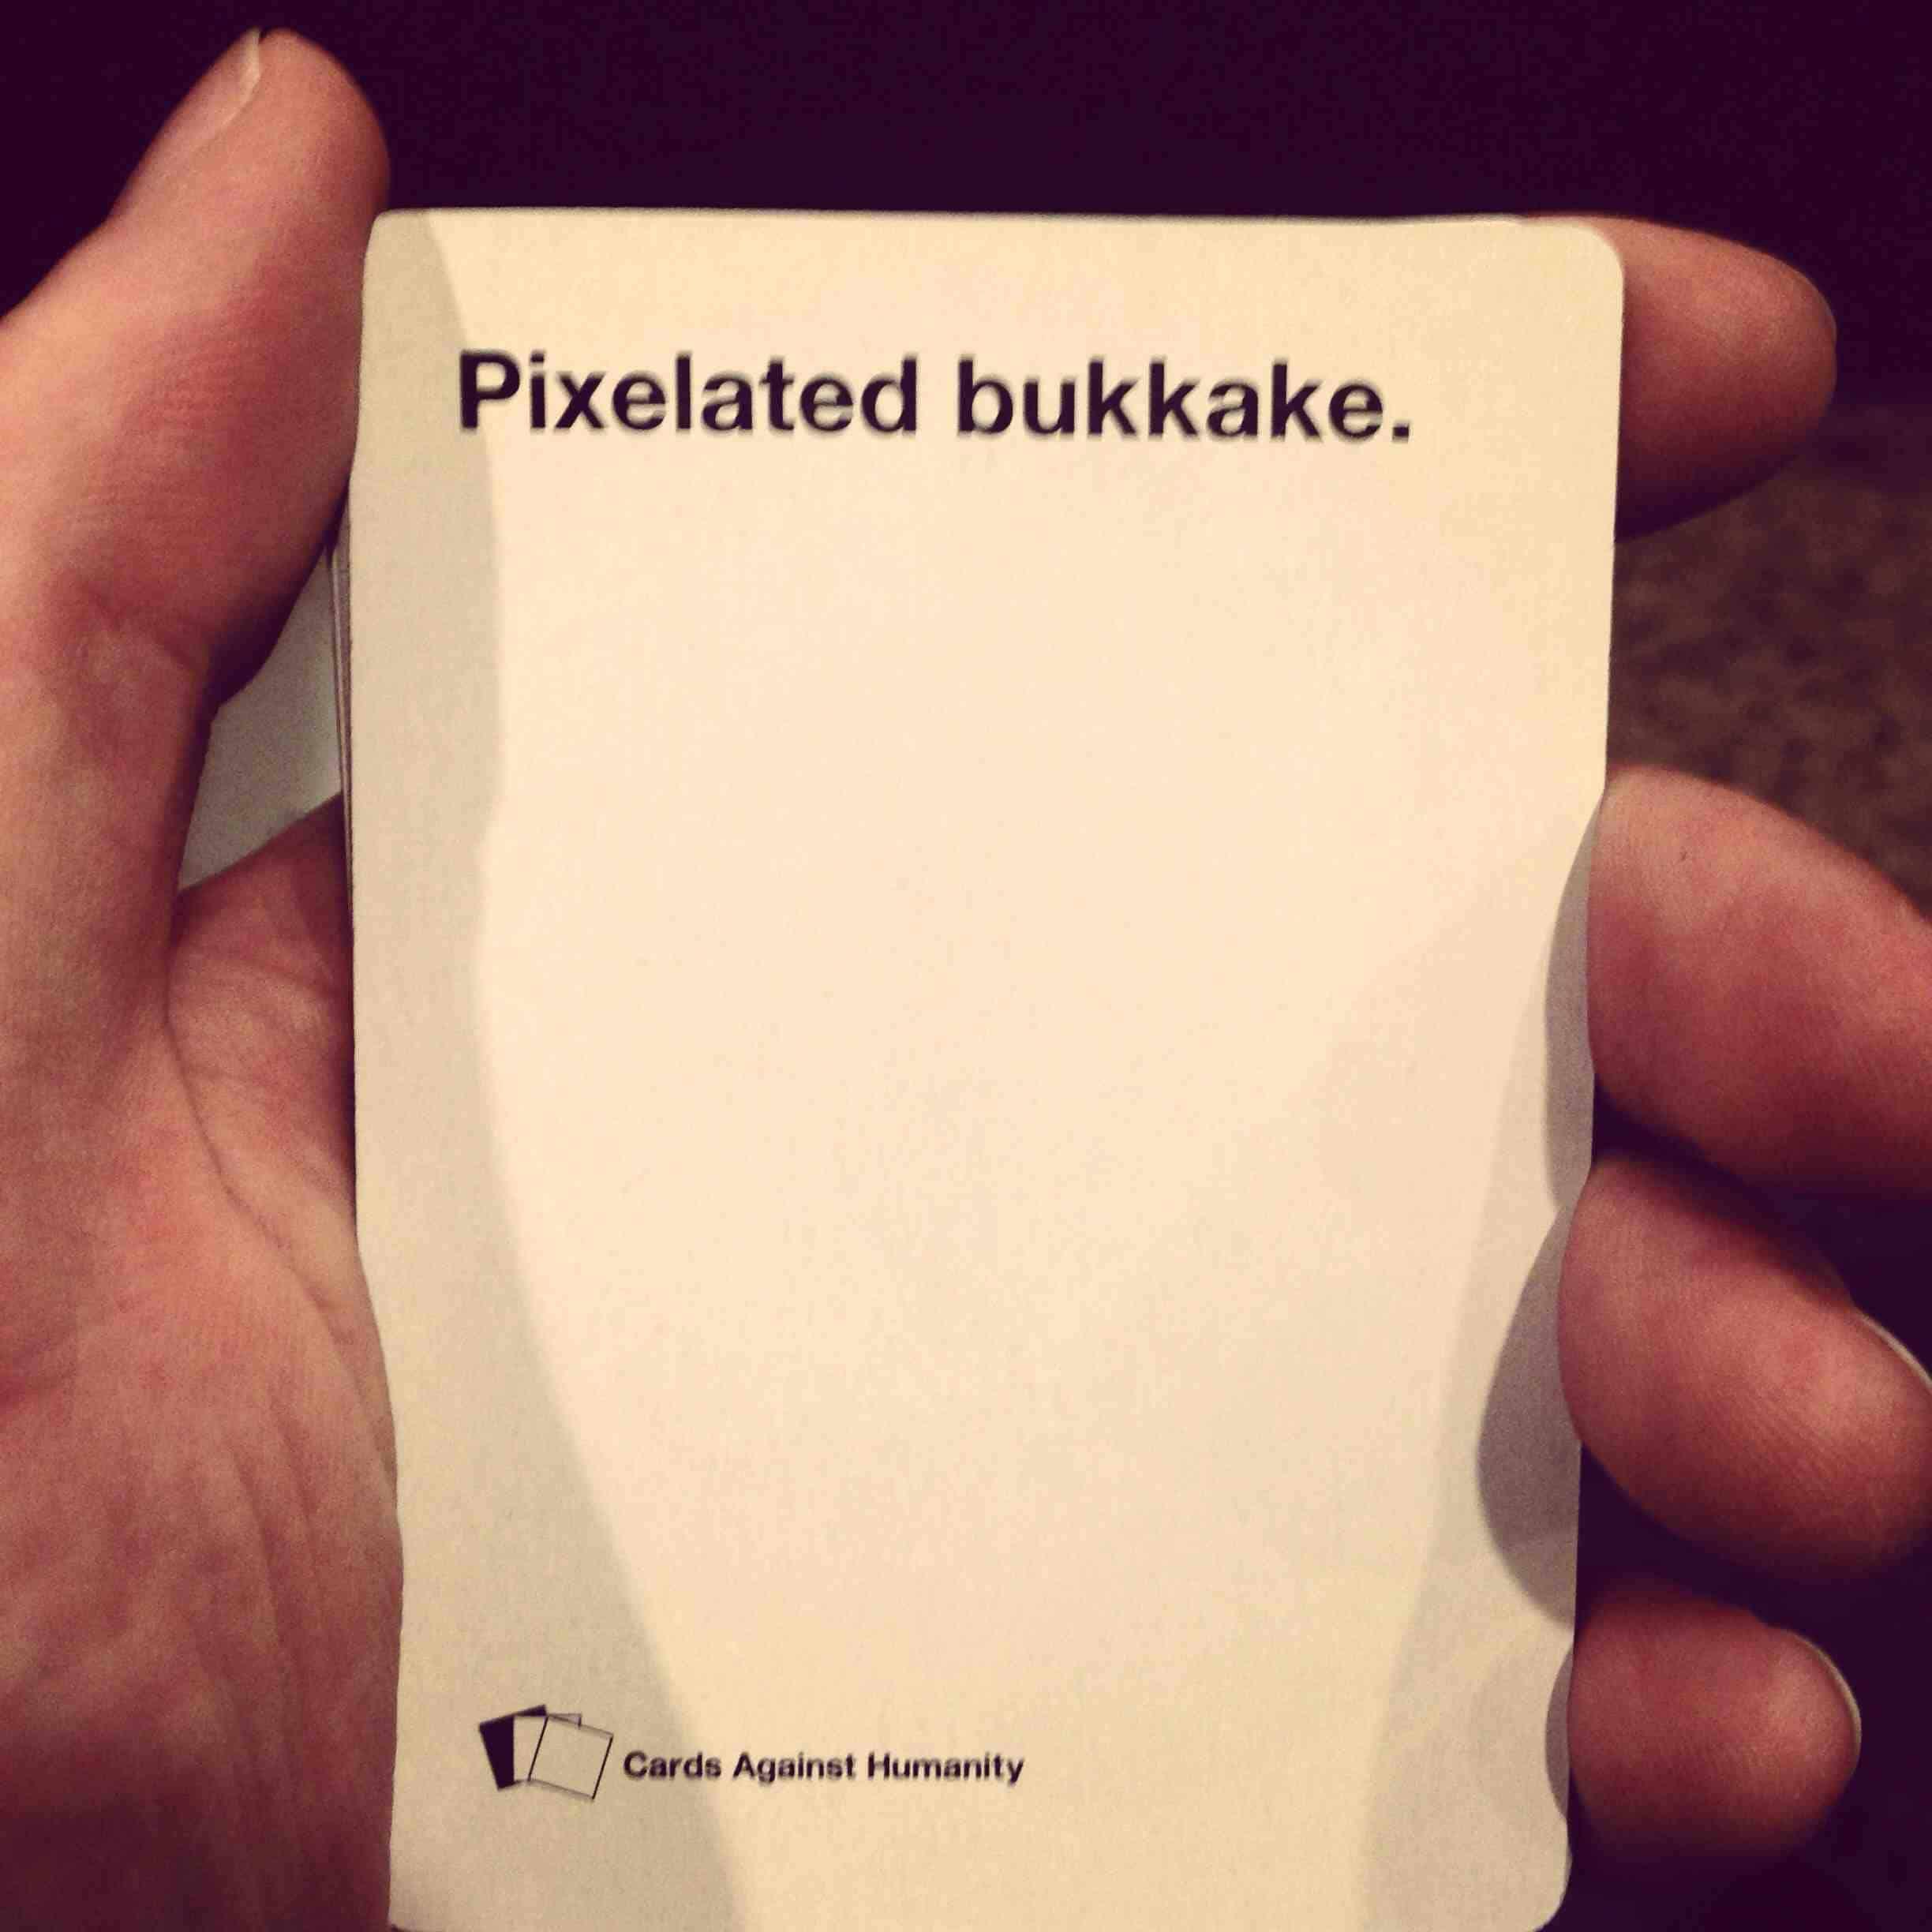 Pixelated Bukkake Cards Against Humanity